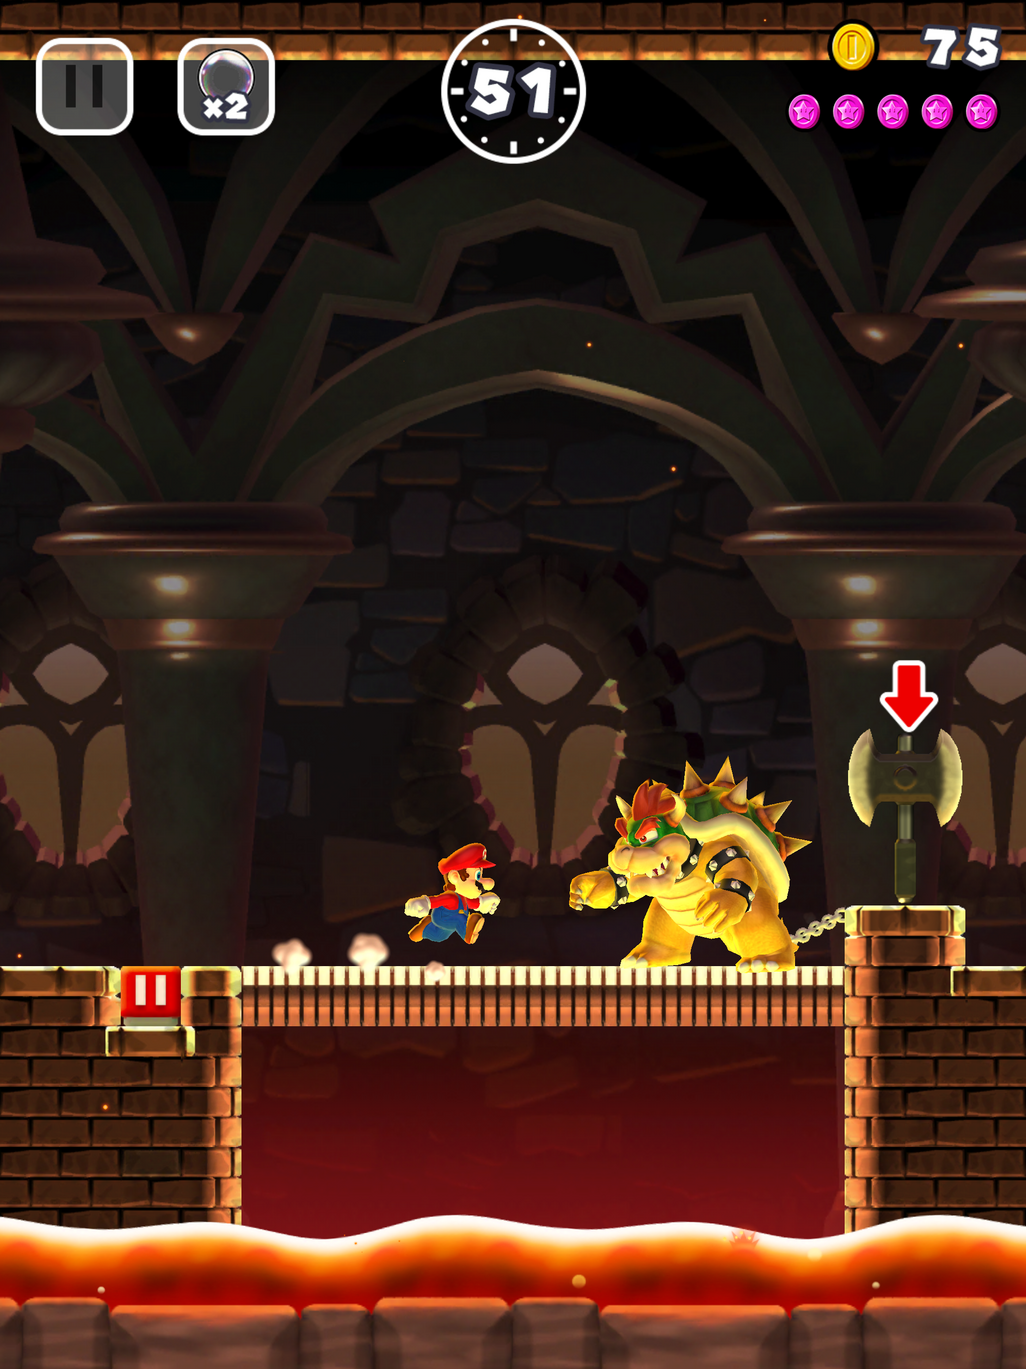 Bowser und Mario in "Super Mario Run"